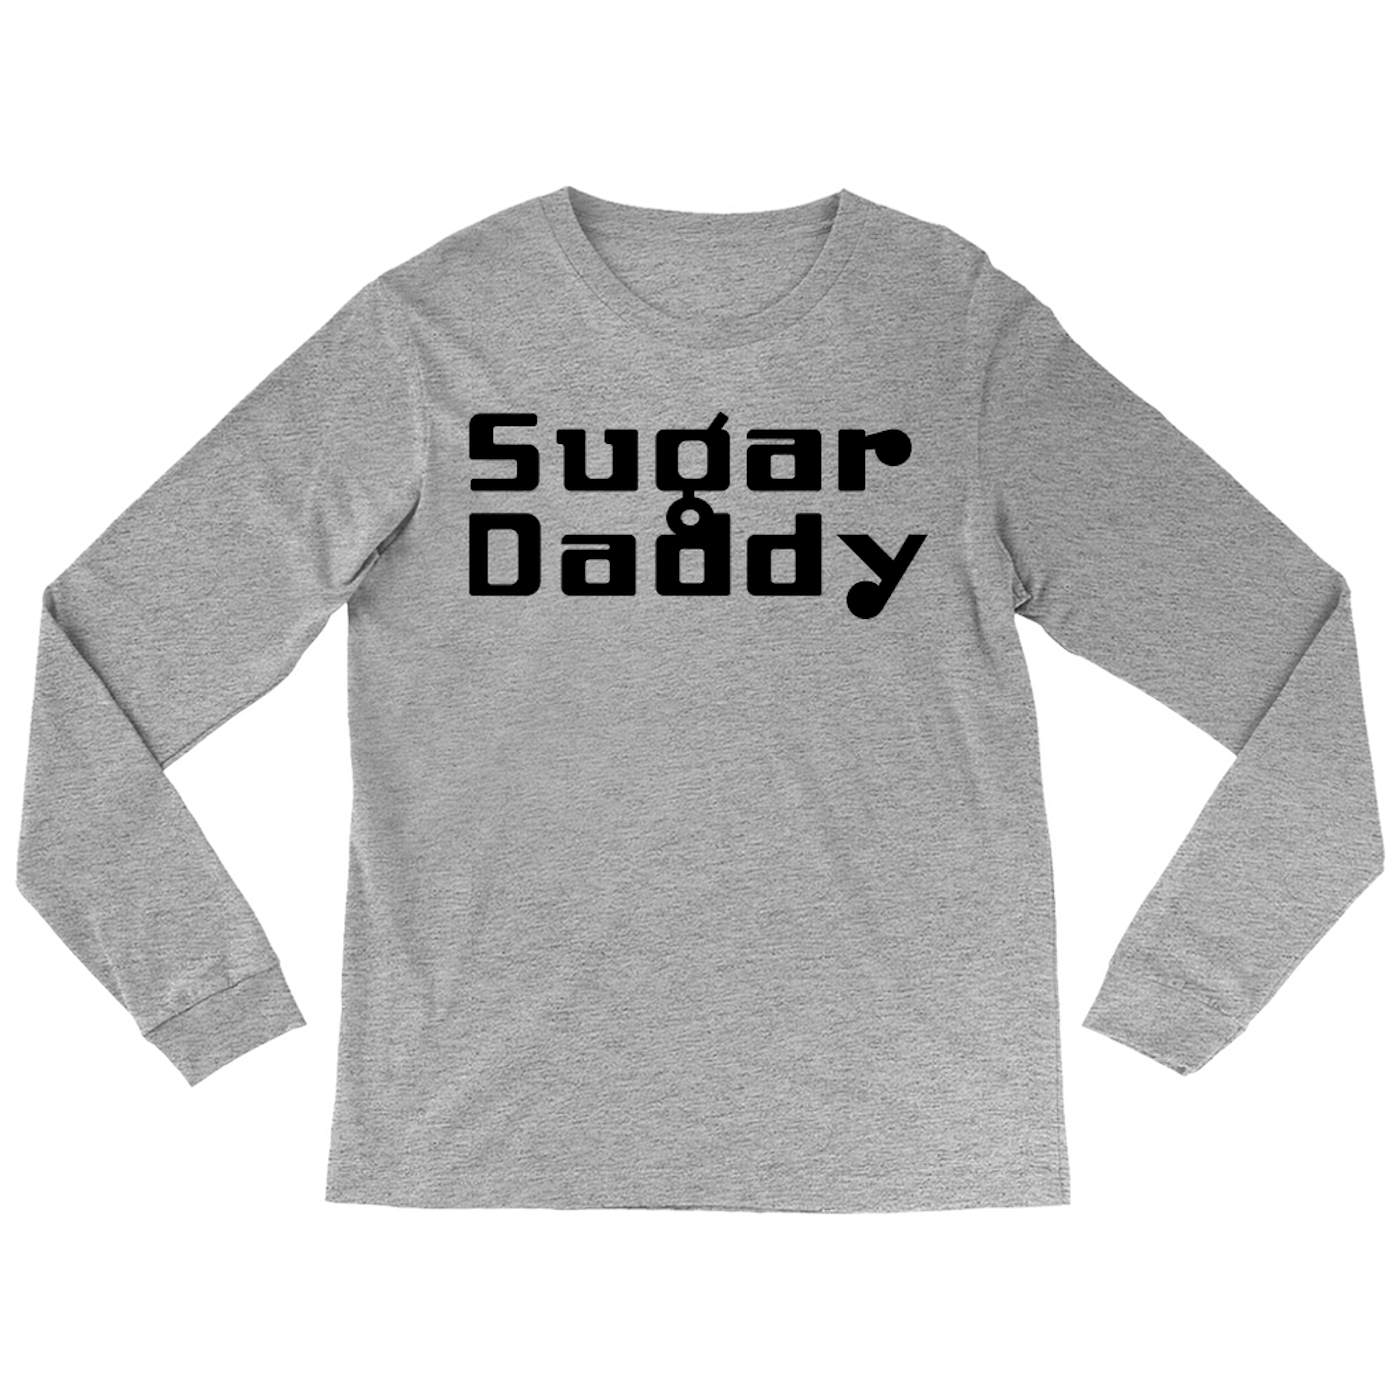 Ramones Long Sleeve Shirt | Sugar Daddy Worn By Dee Dee Ramone Ramones Shirt